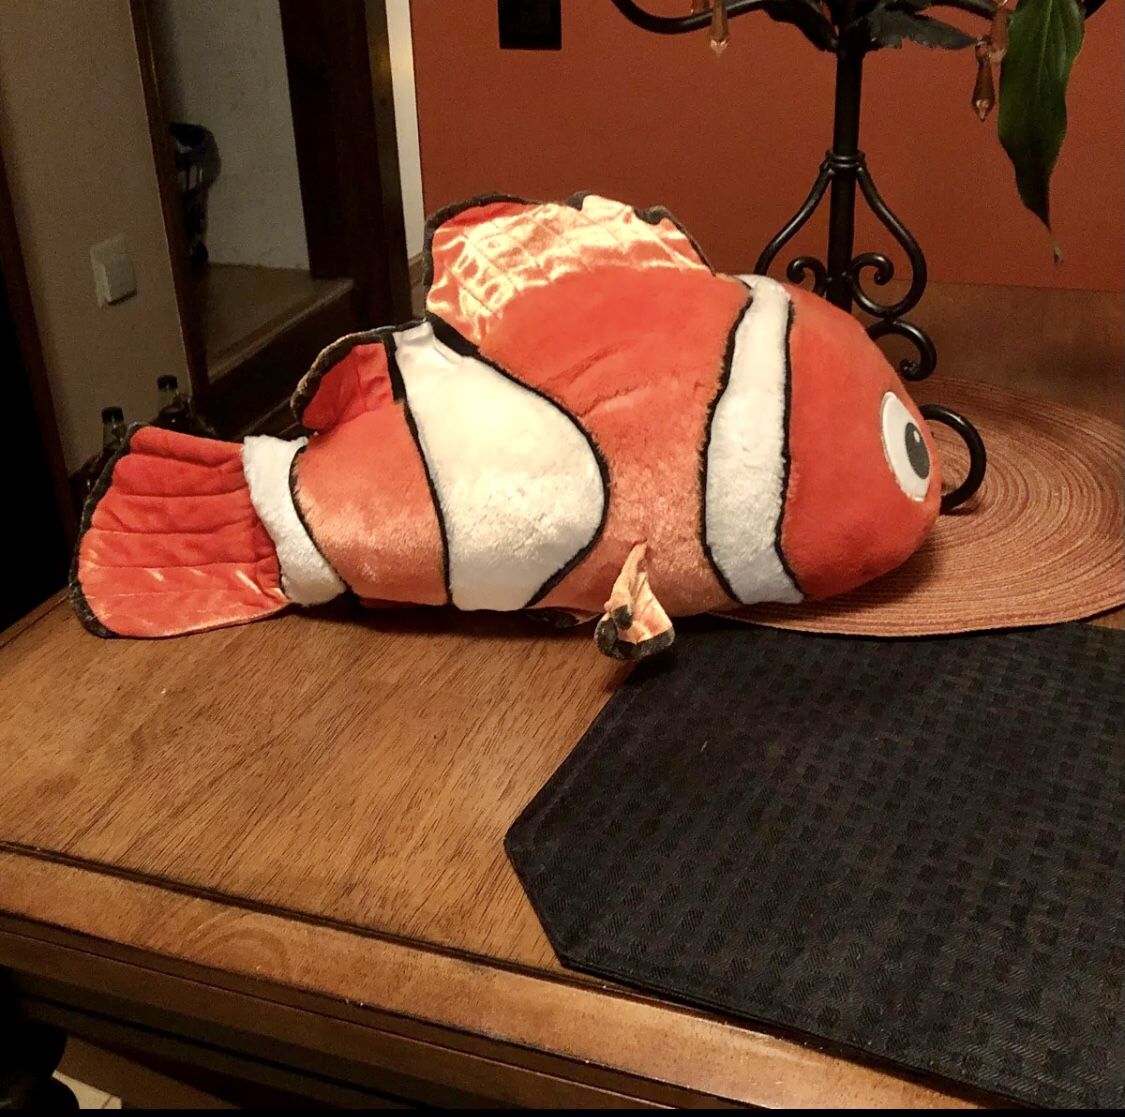 Finding Nemo plush